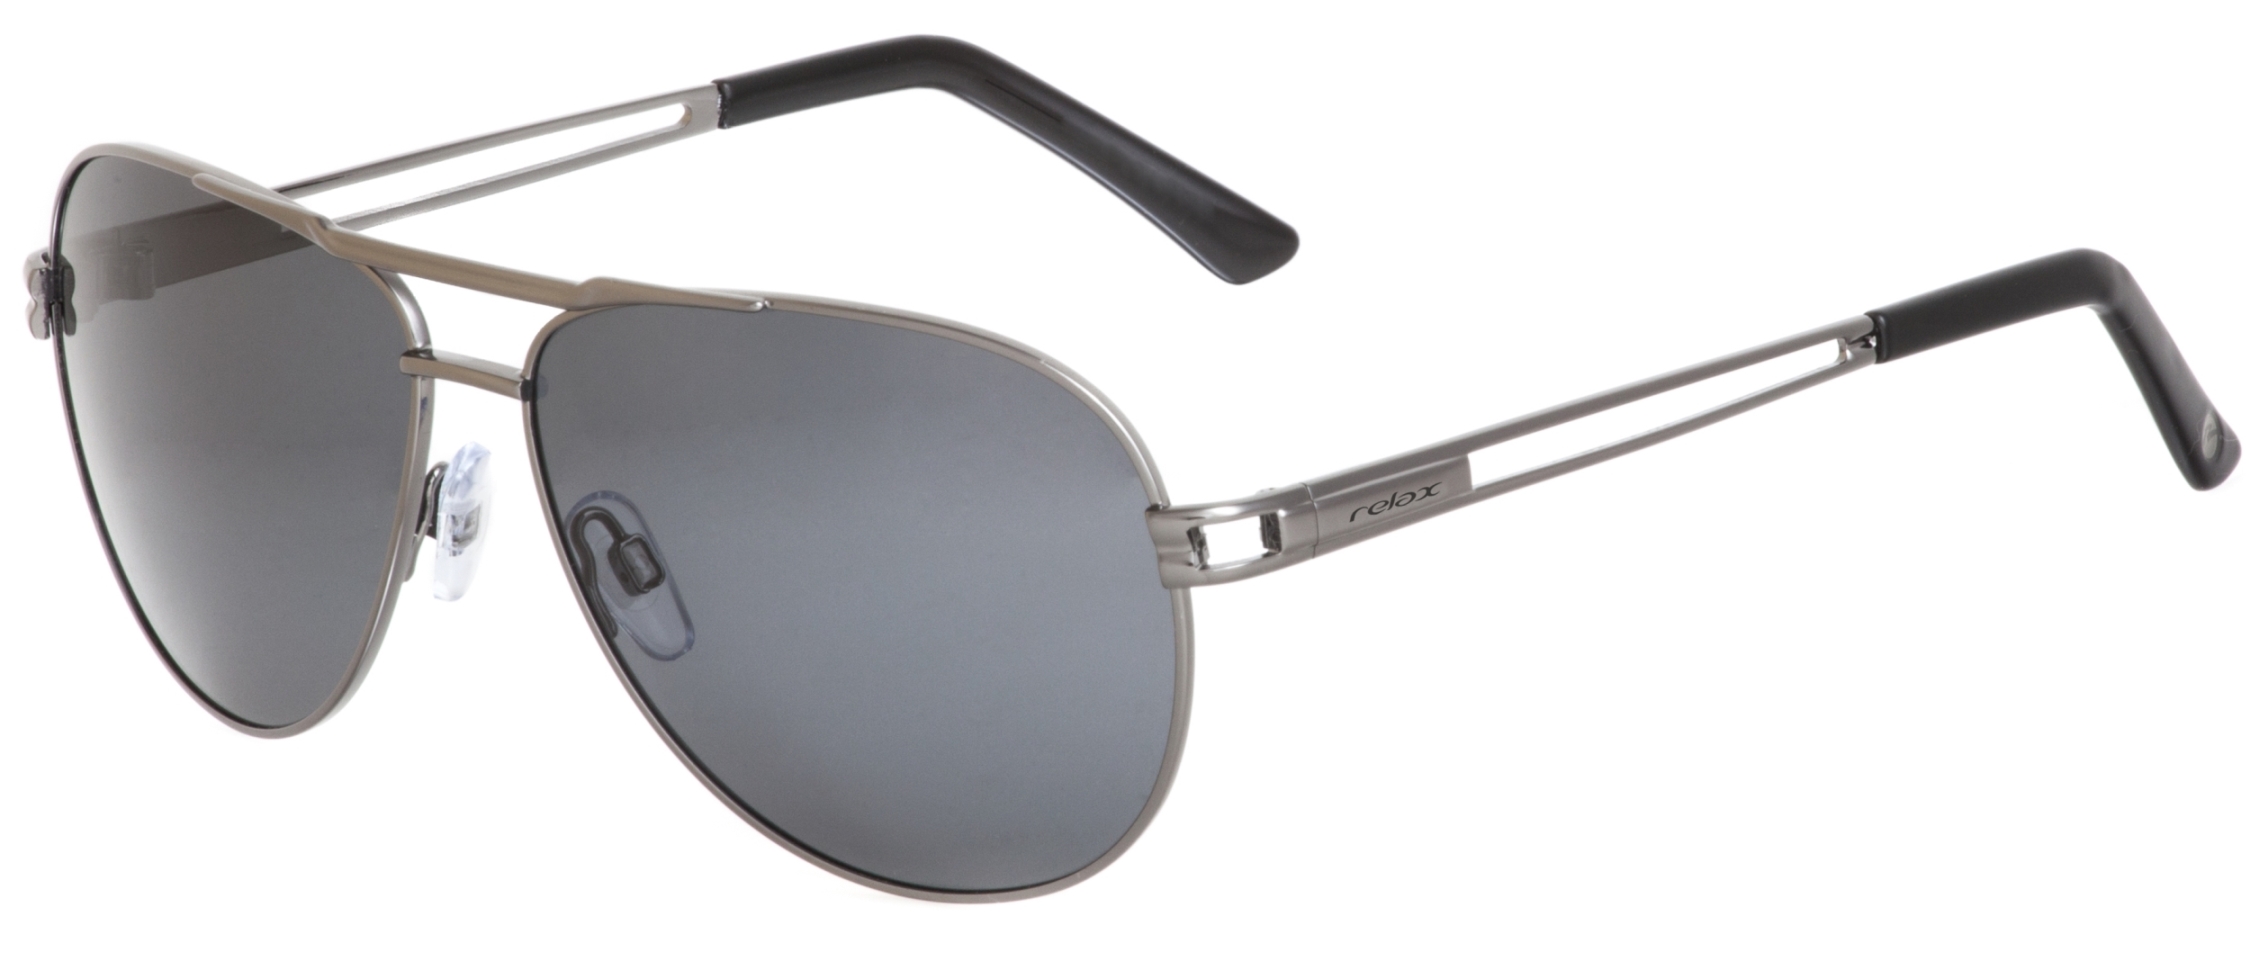 Polarized sunglasses  Relax Condore R2288B standard